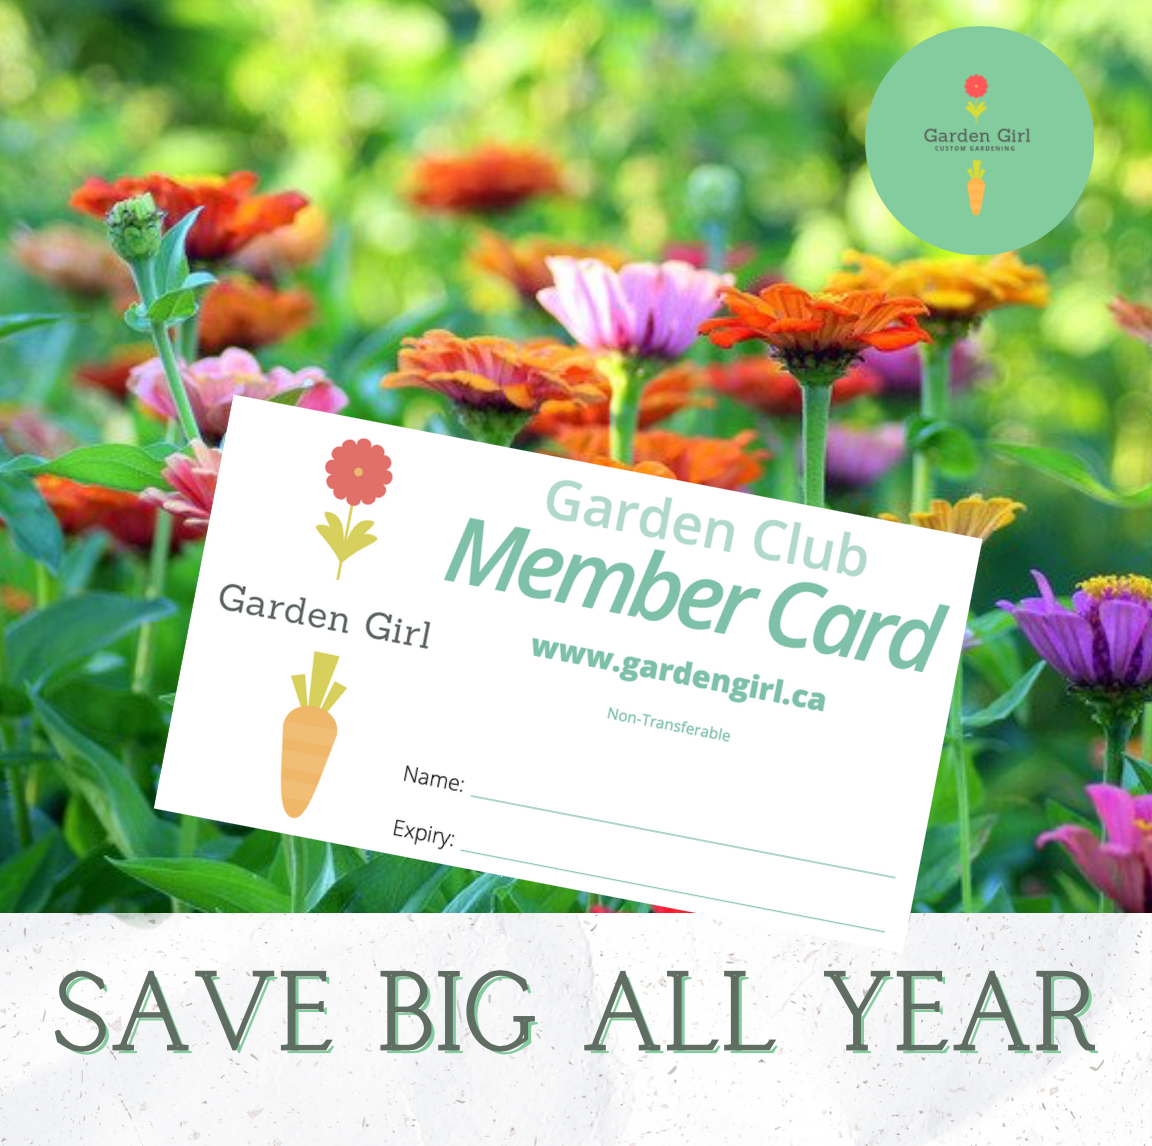 Garden Girl Membership Card Save 10% now!